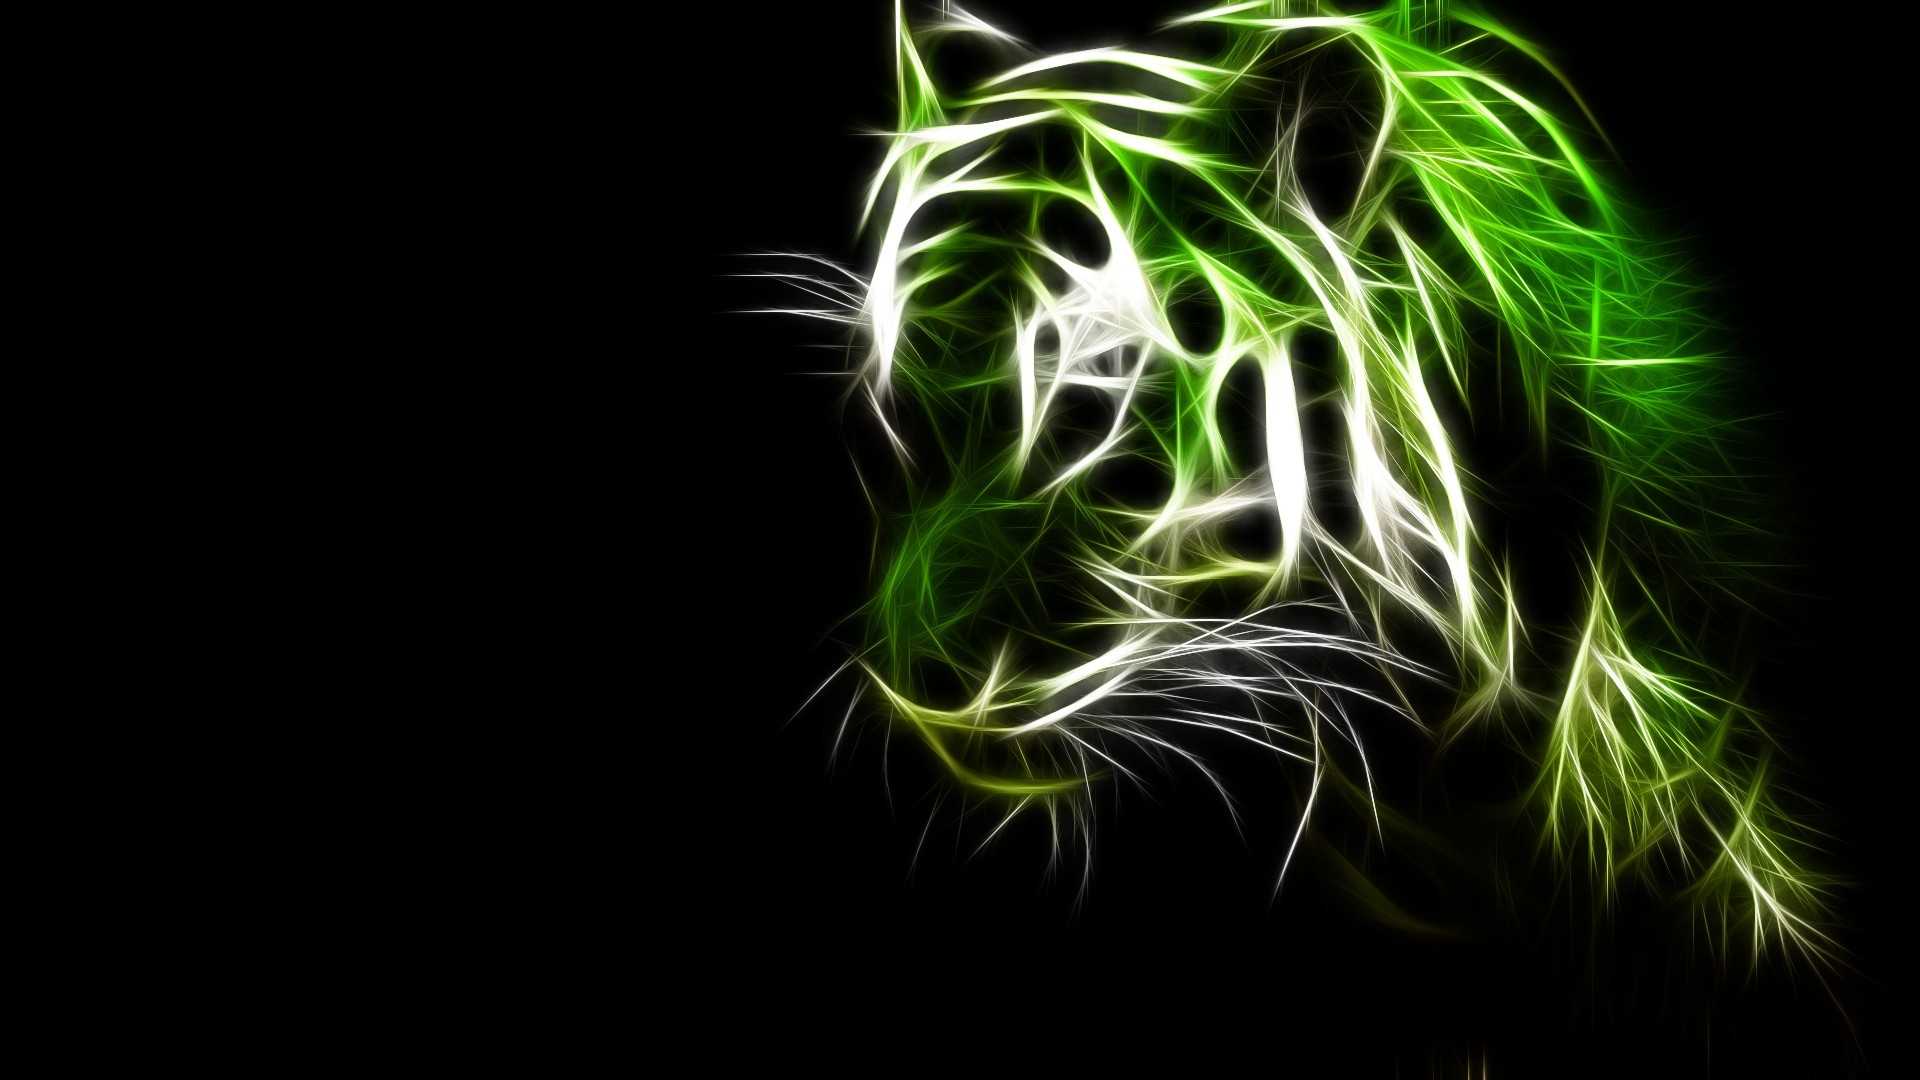 green cats animals tigers fractalius black background fractal art 1920x1080 wallpaper High Quality Wallpaper, High Definition Wallpaper